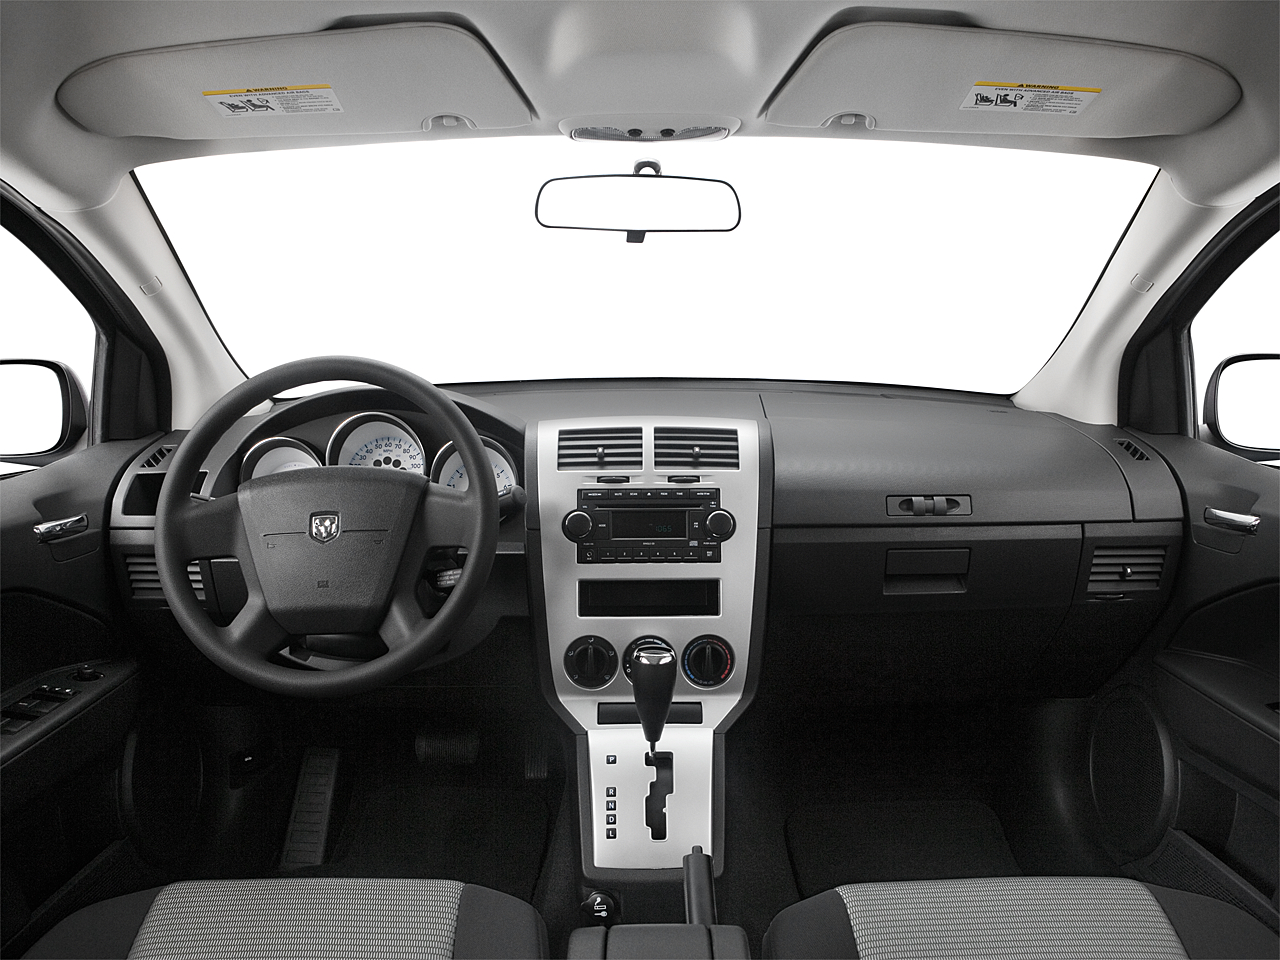 2008 Dodge Caliber SXT 4dr Wagon - Research - GrooveCar